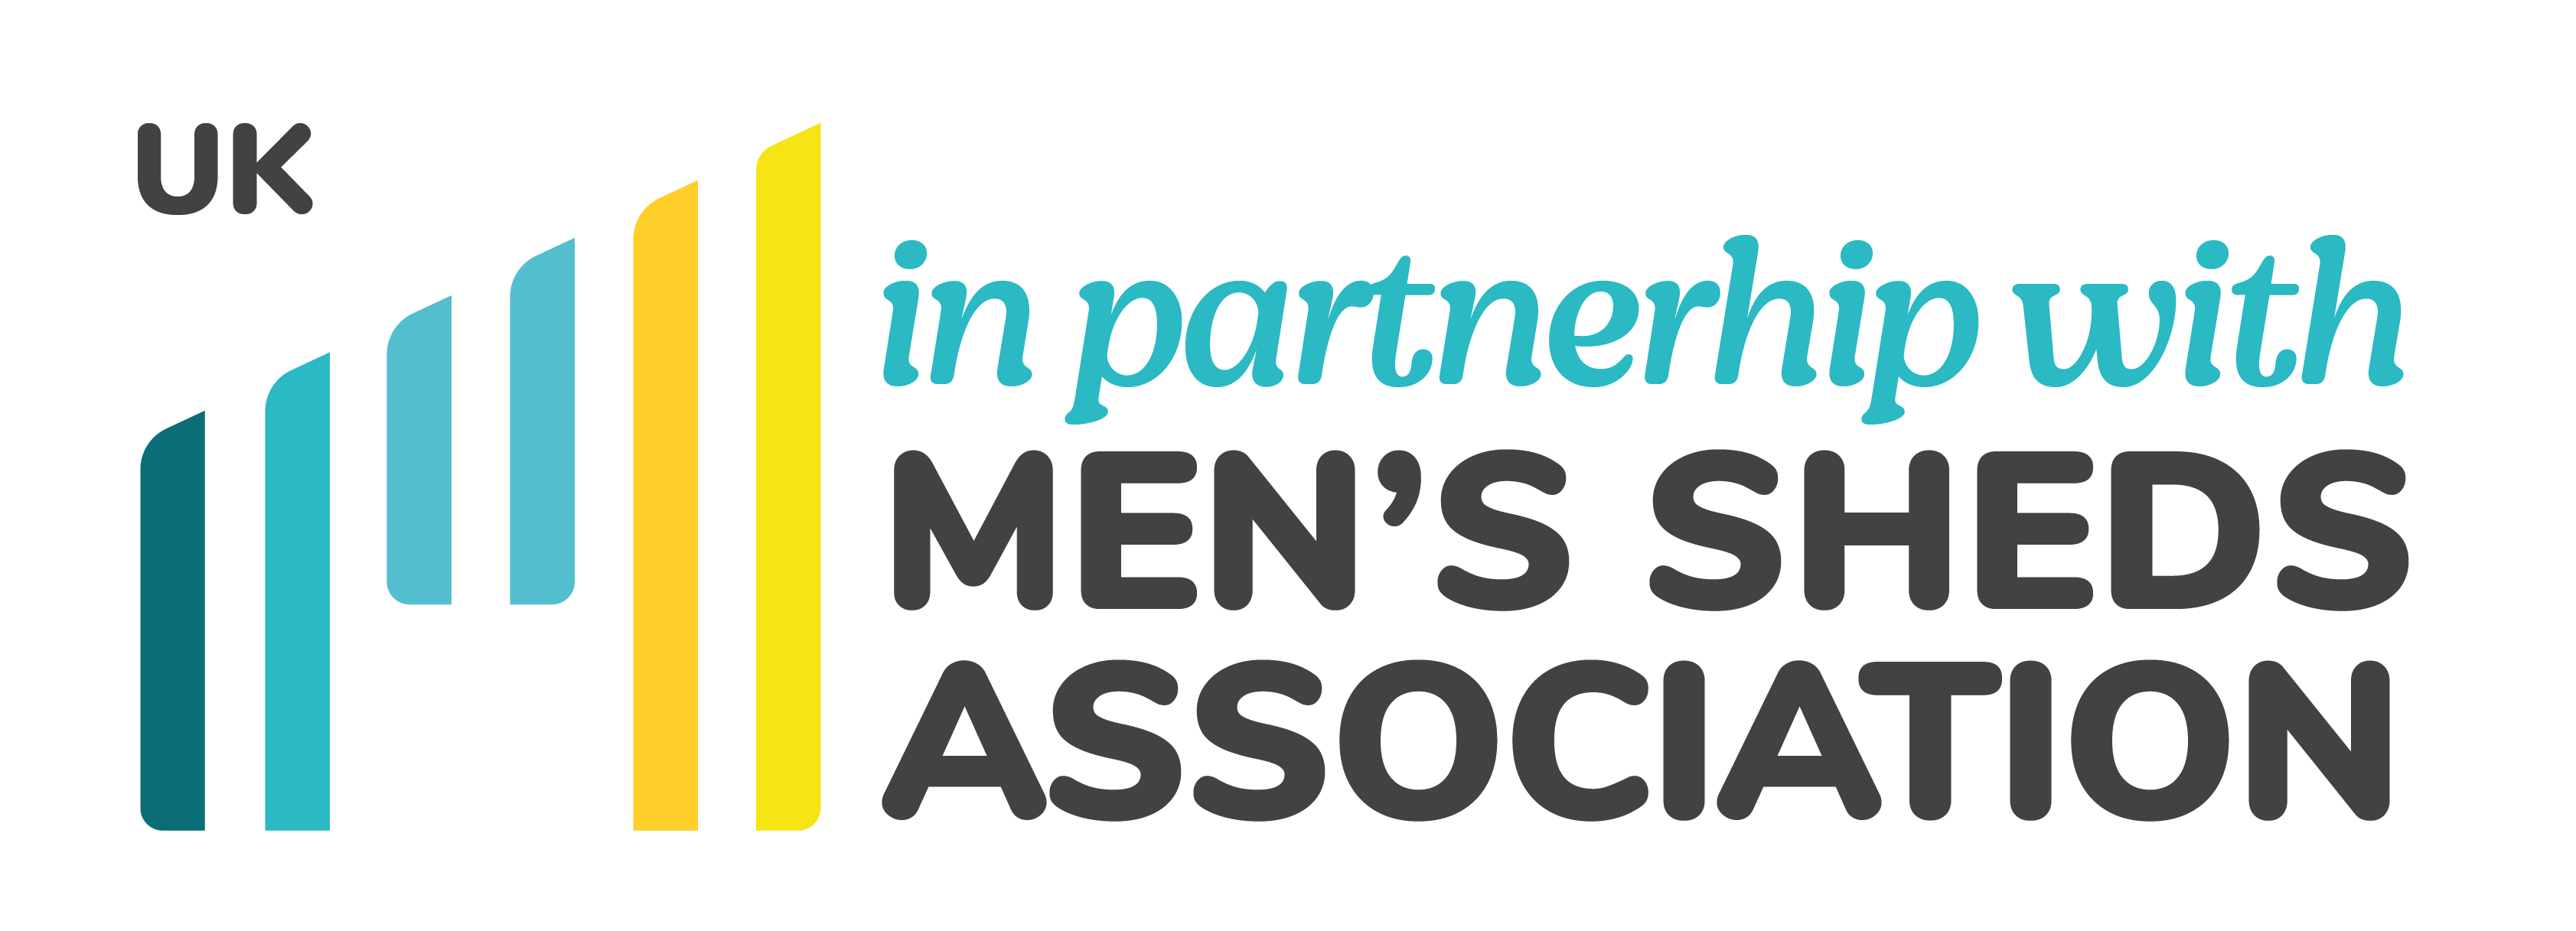 In partnership with Men's Sheds Association logo